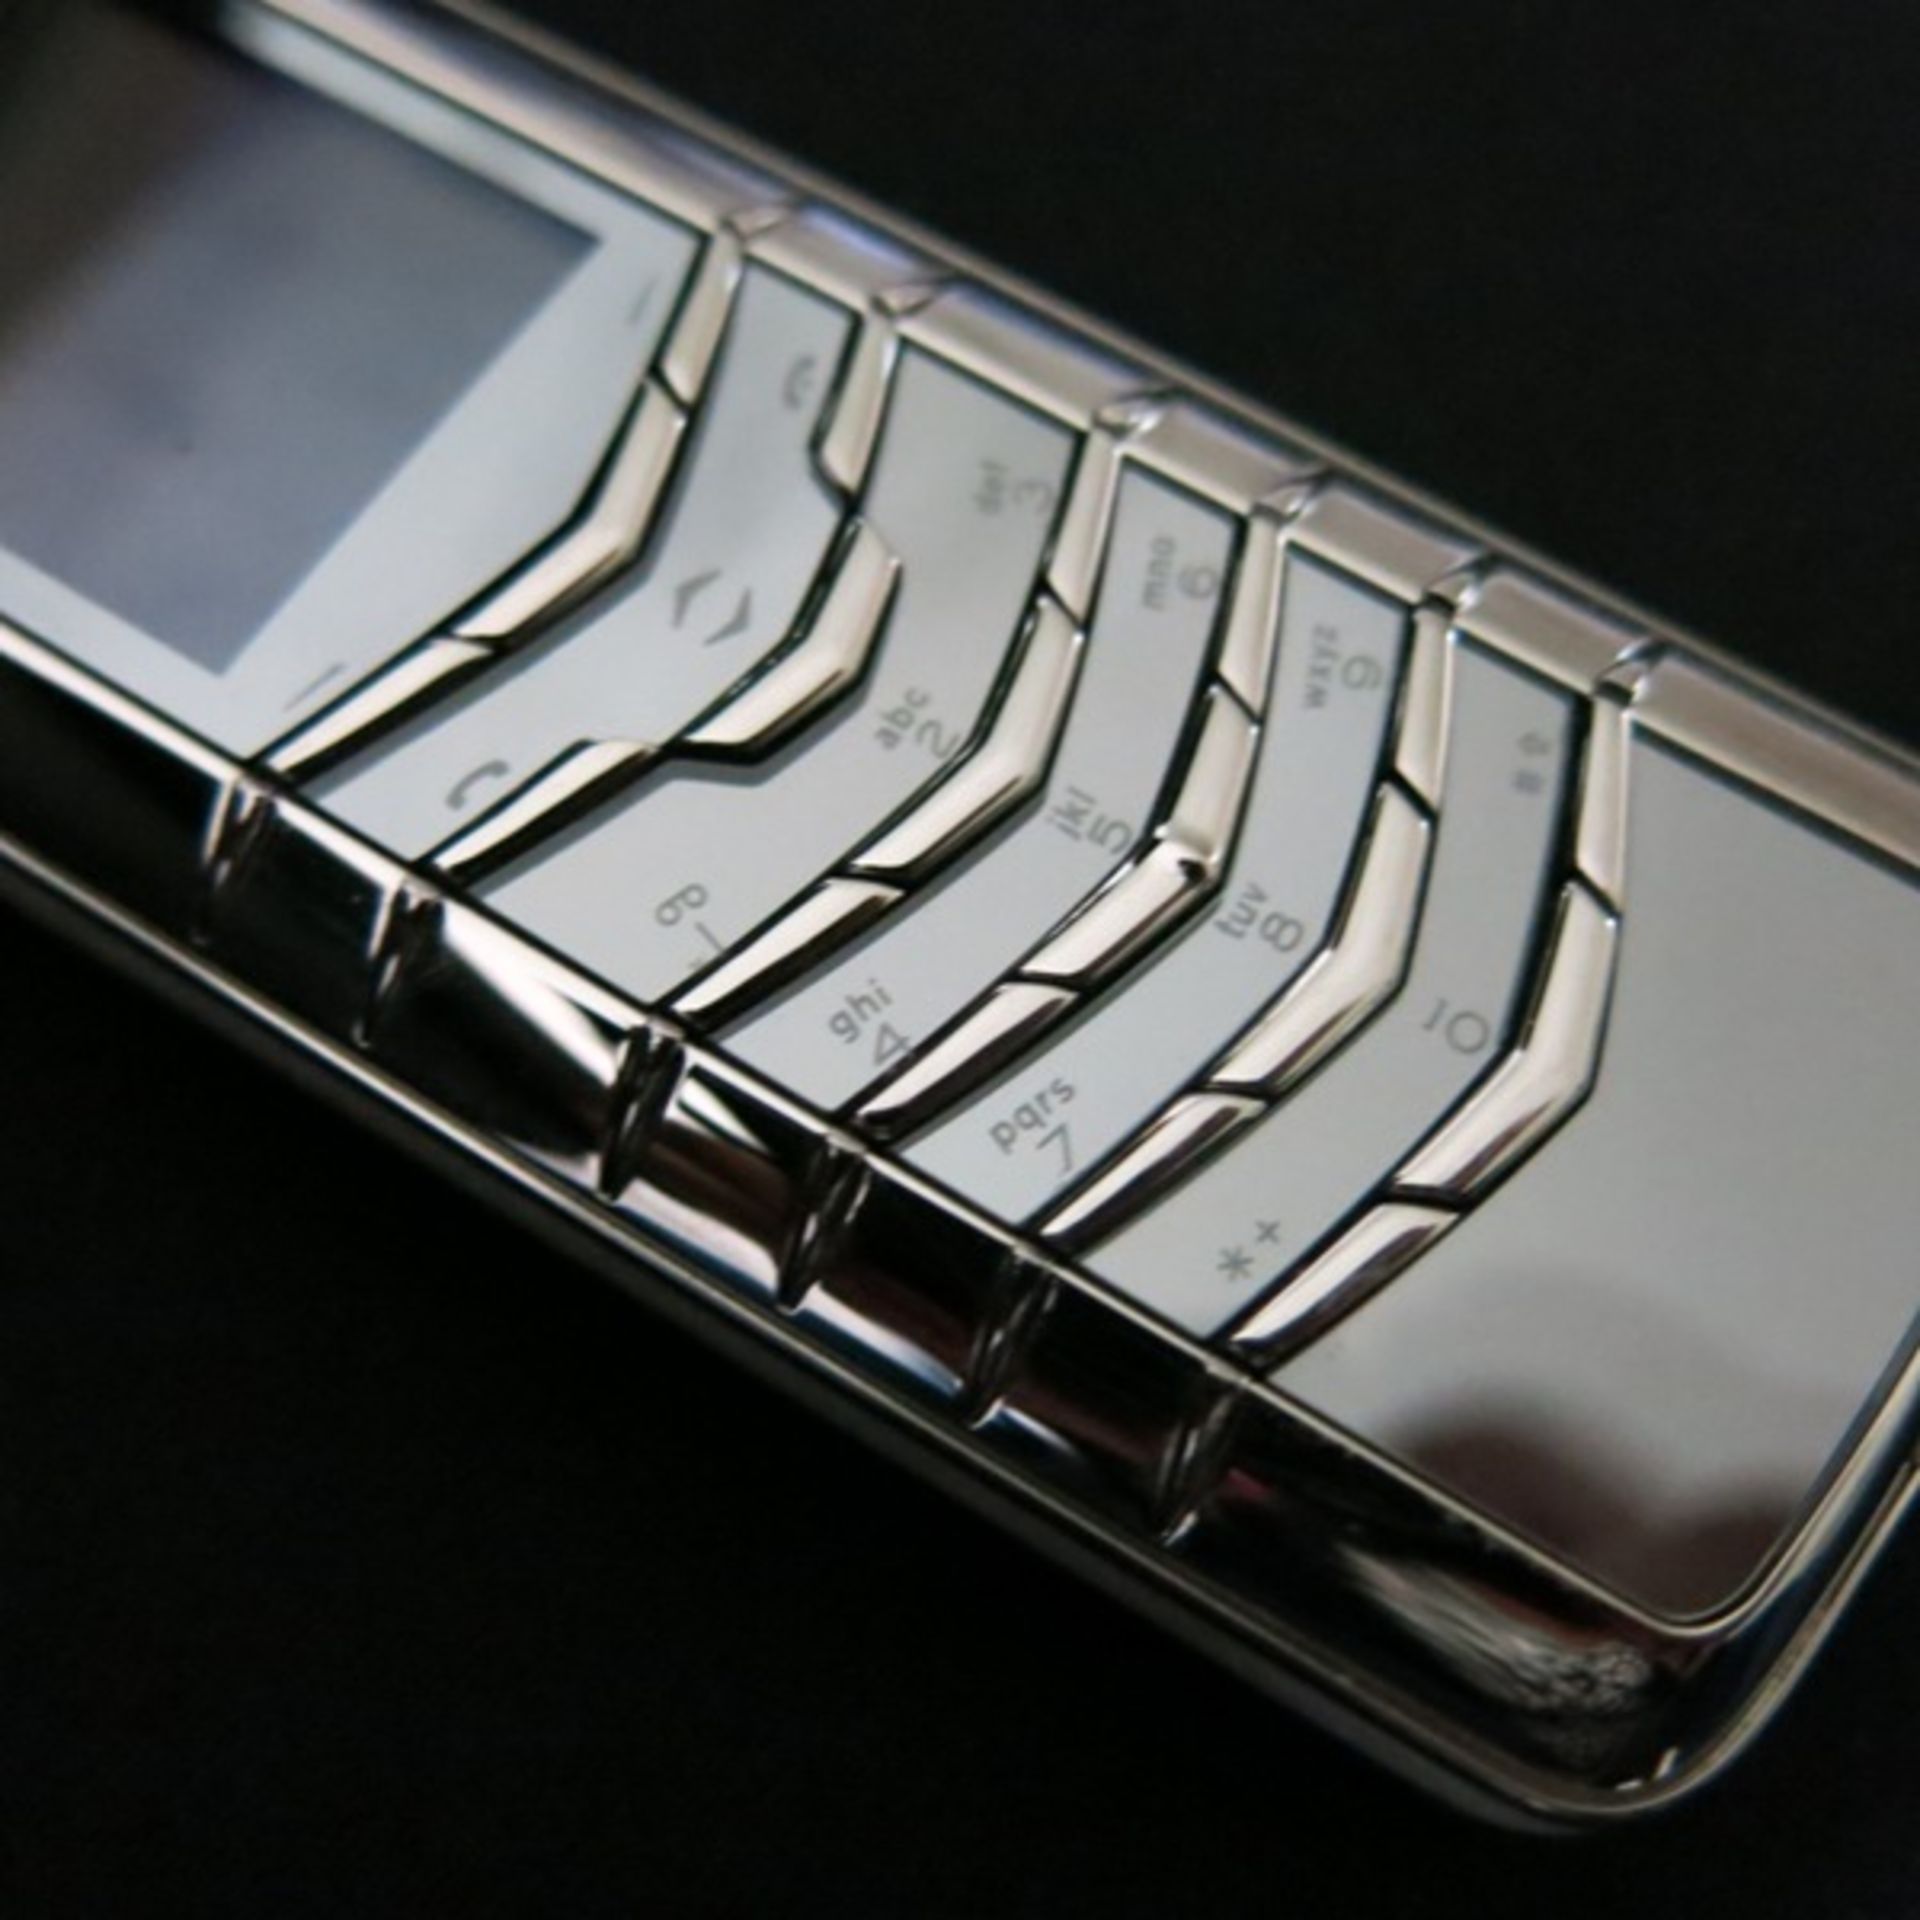 Vertu Signature Classic Phone in Platinum (950) with Platinum Functional Keys & Outer Cover. - Image 3 of 3